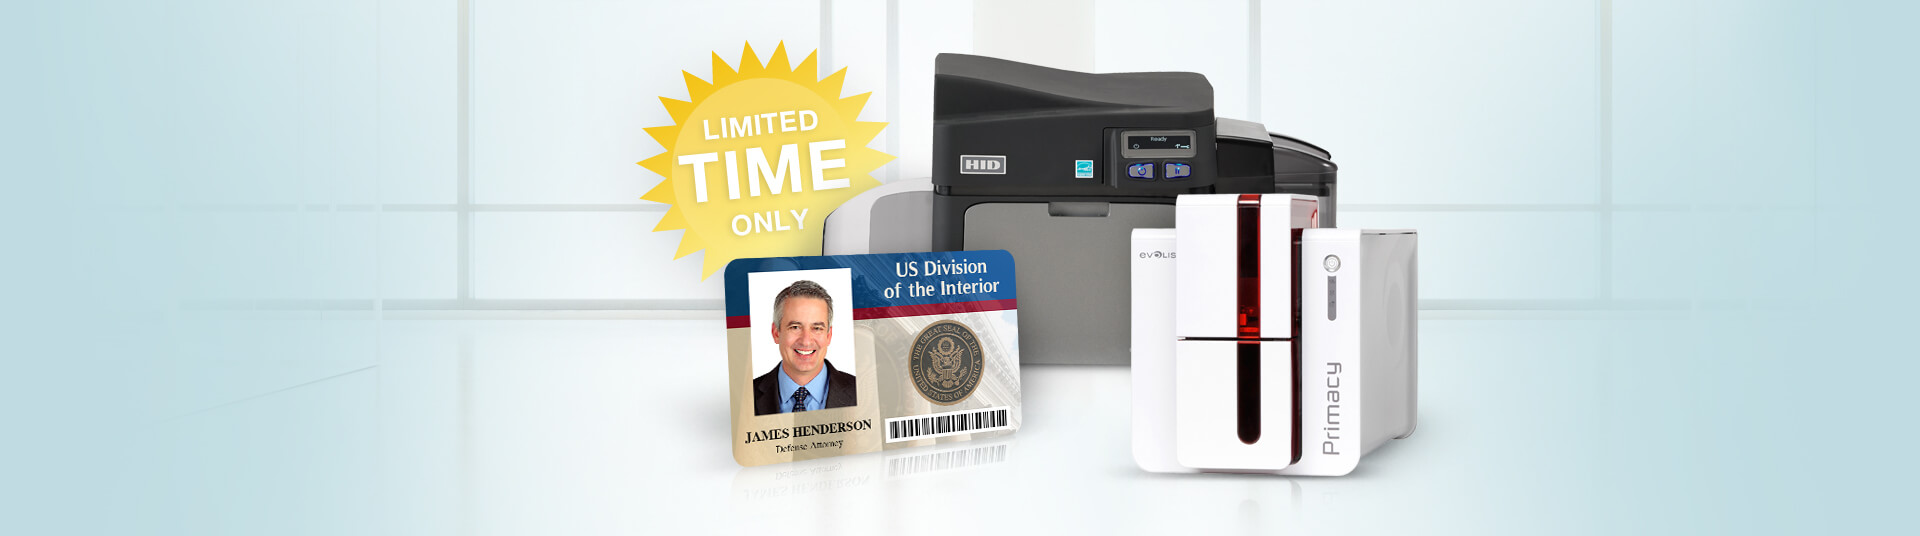 ID Card Printer Rebate Offers